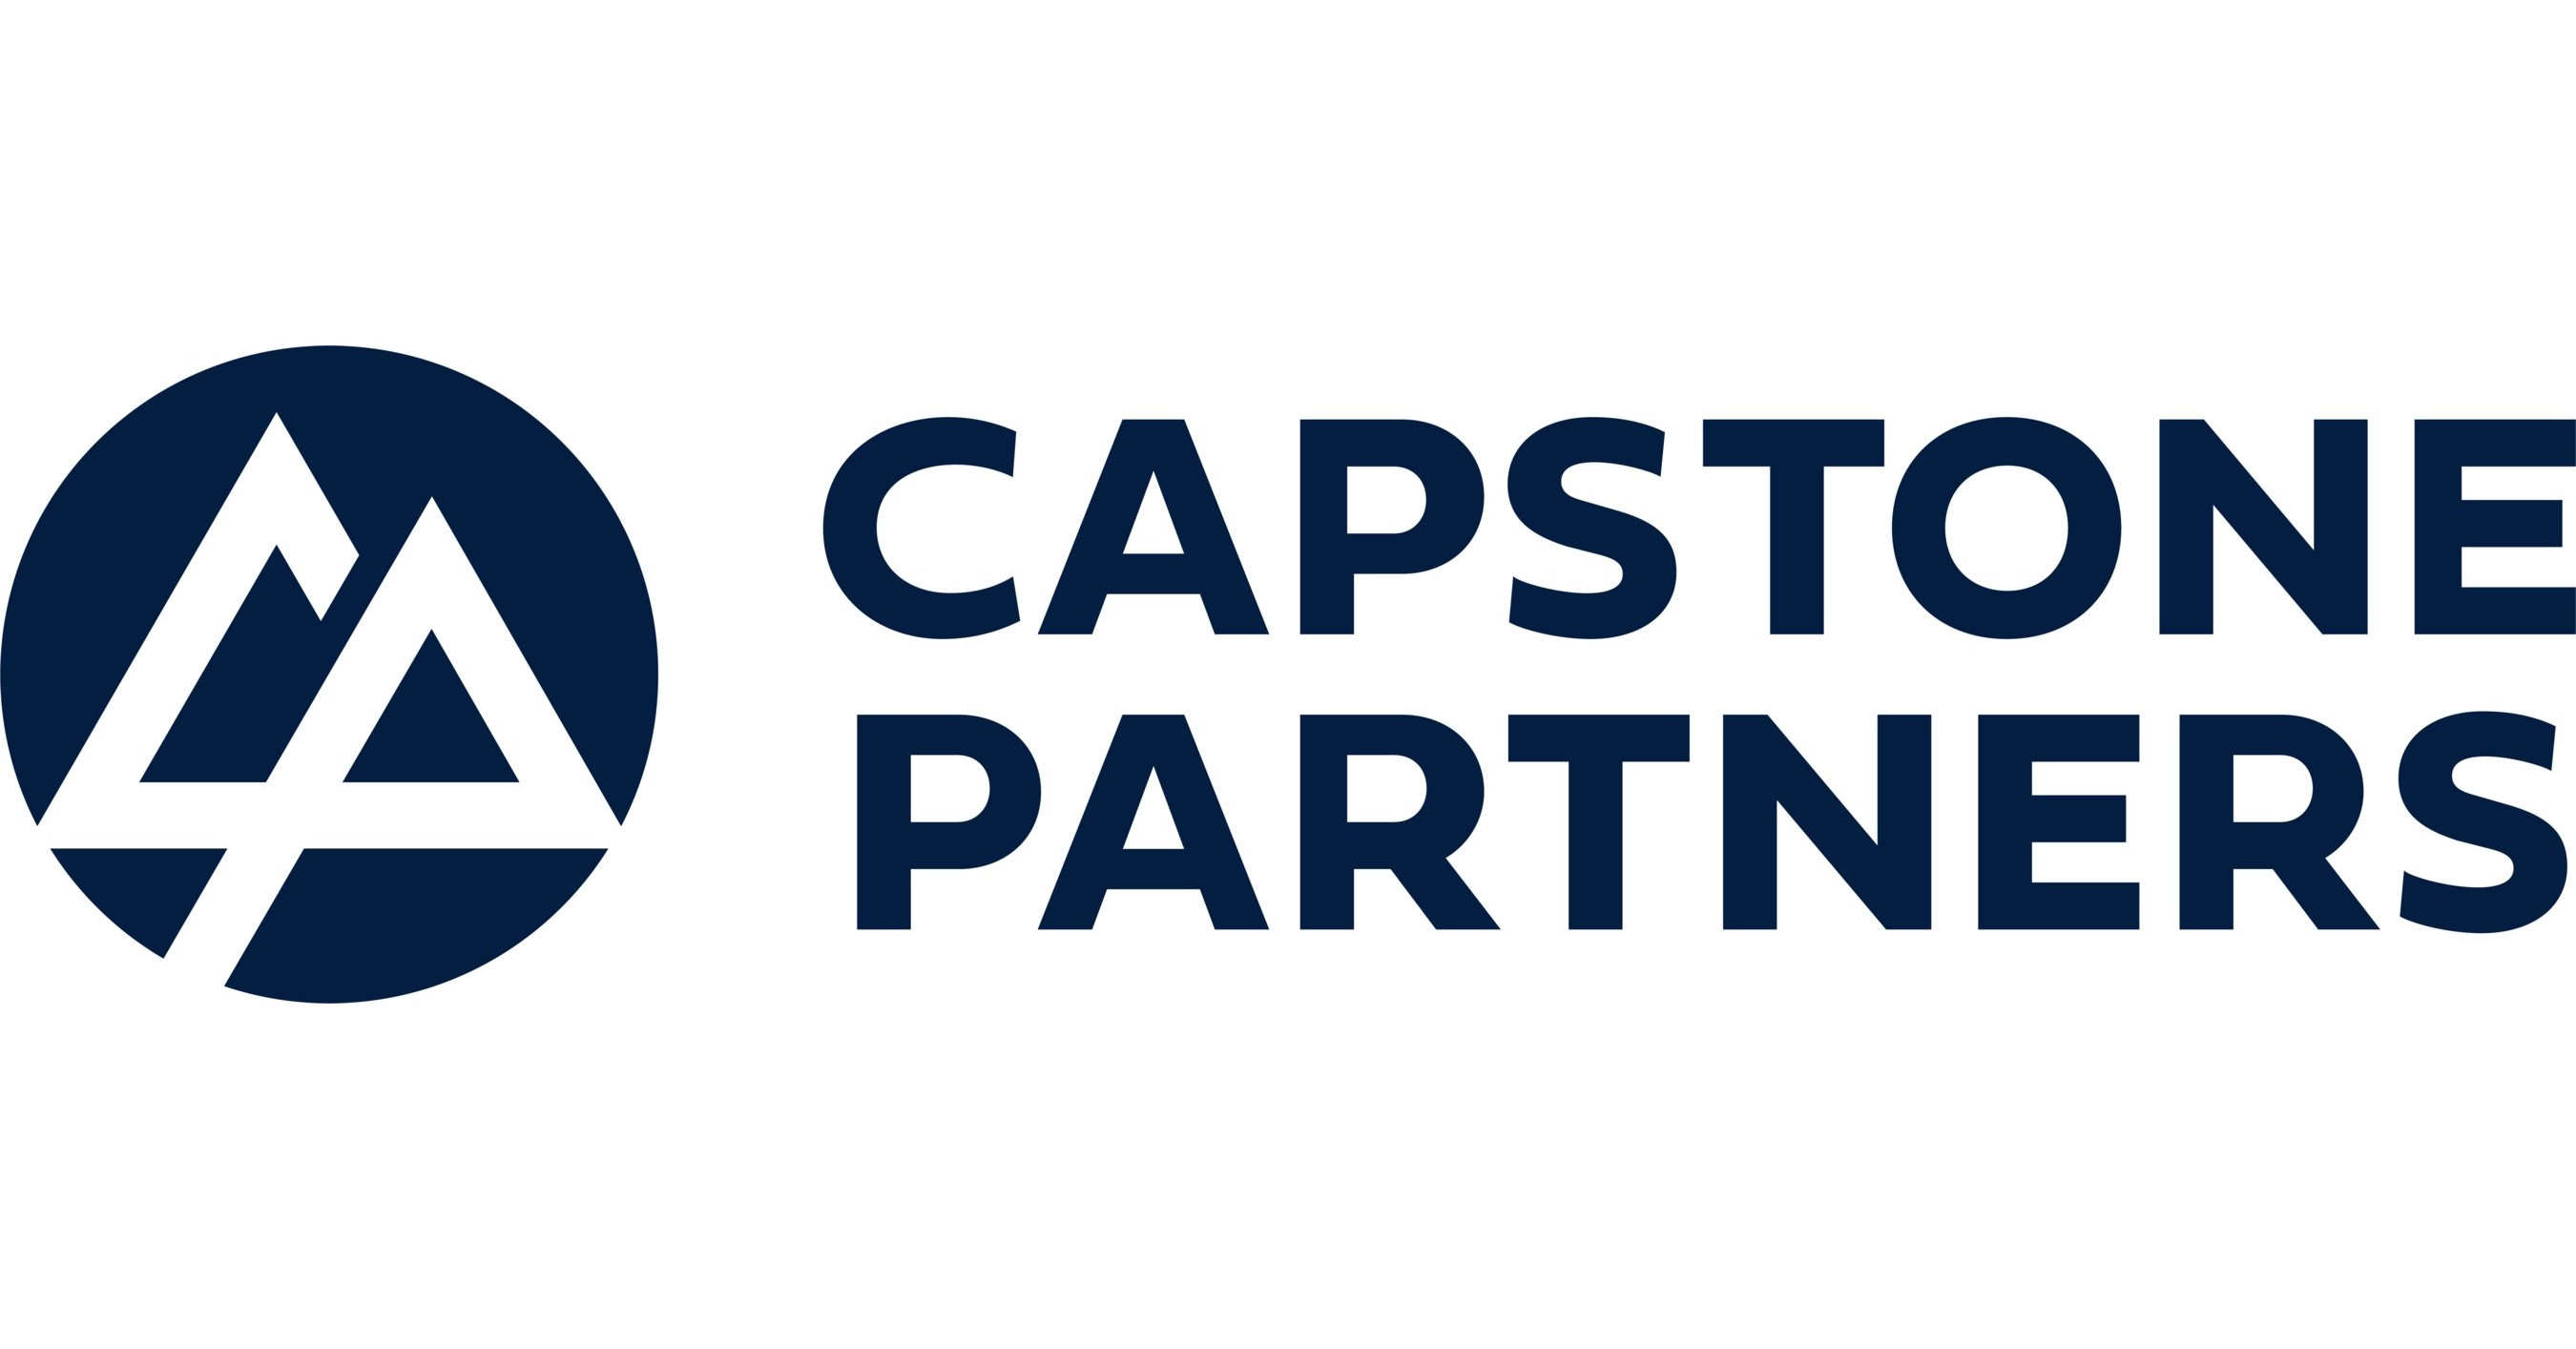 Capstone financial partners forex trading secrets ebook torrents